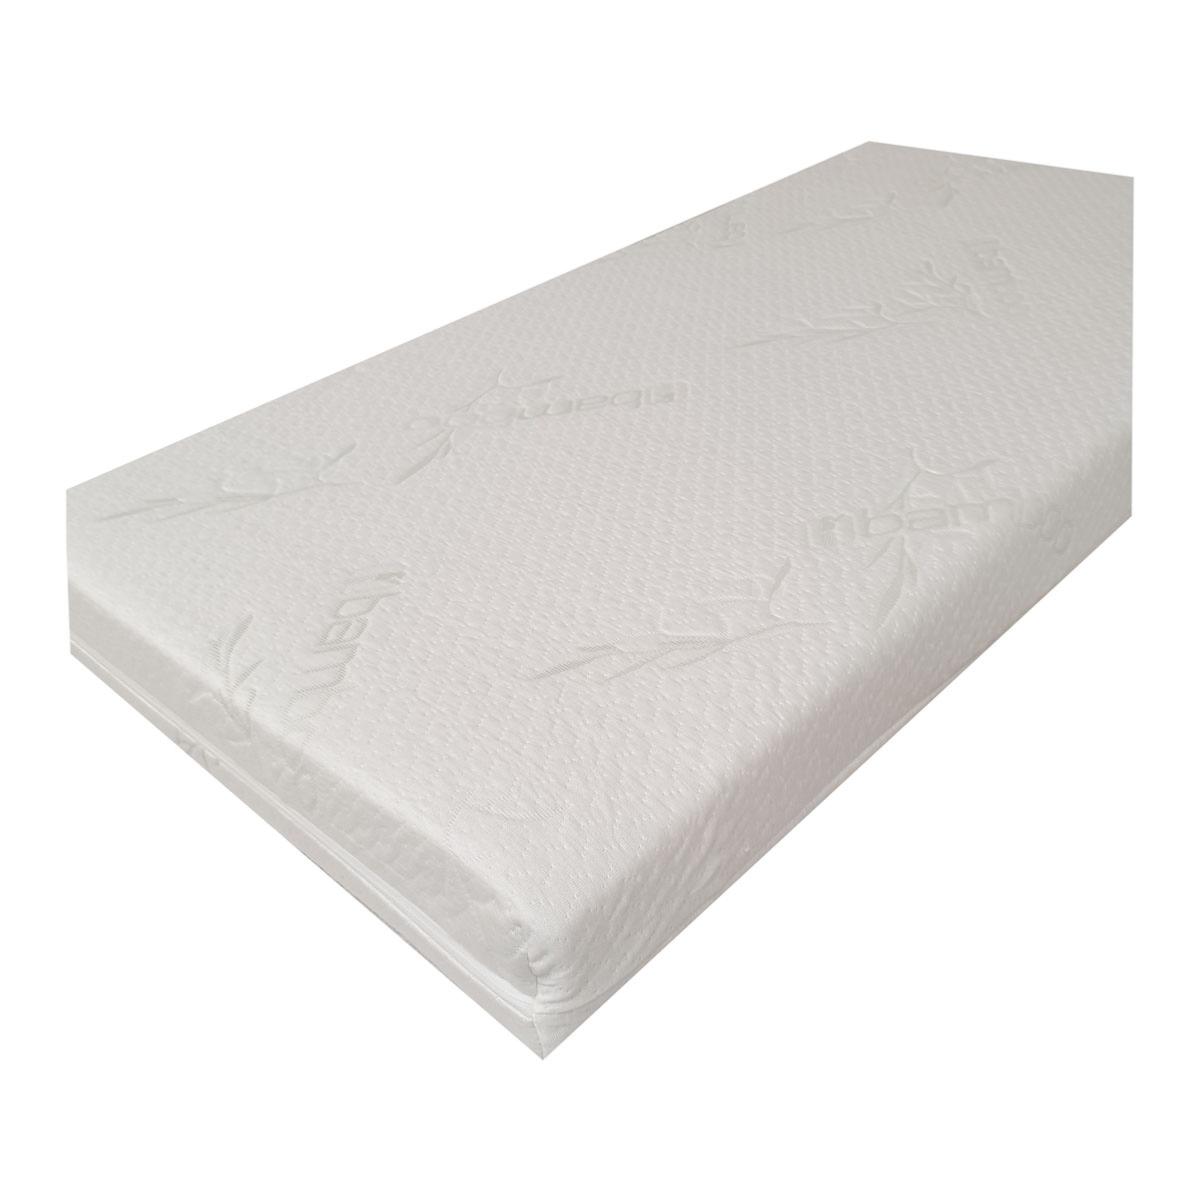 Sensitive baby skin mattress 120 x 60 x 10 cm